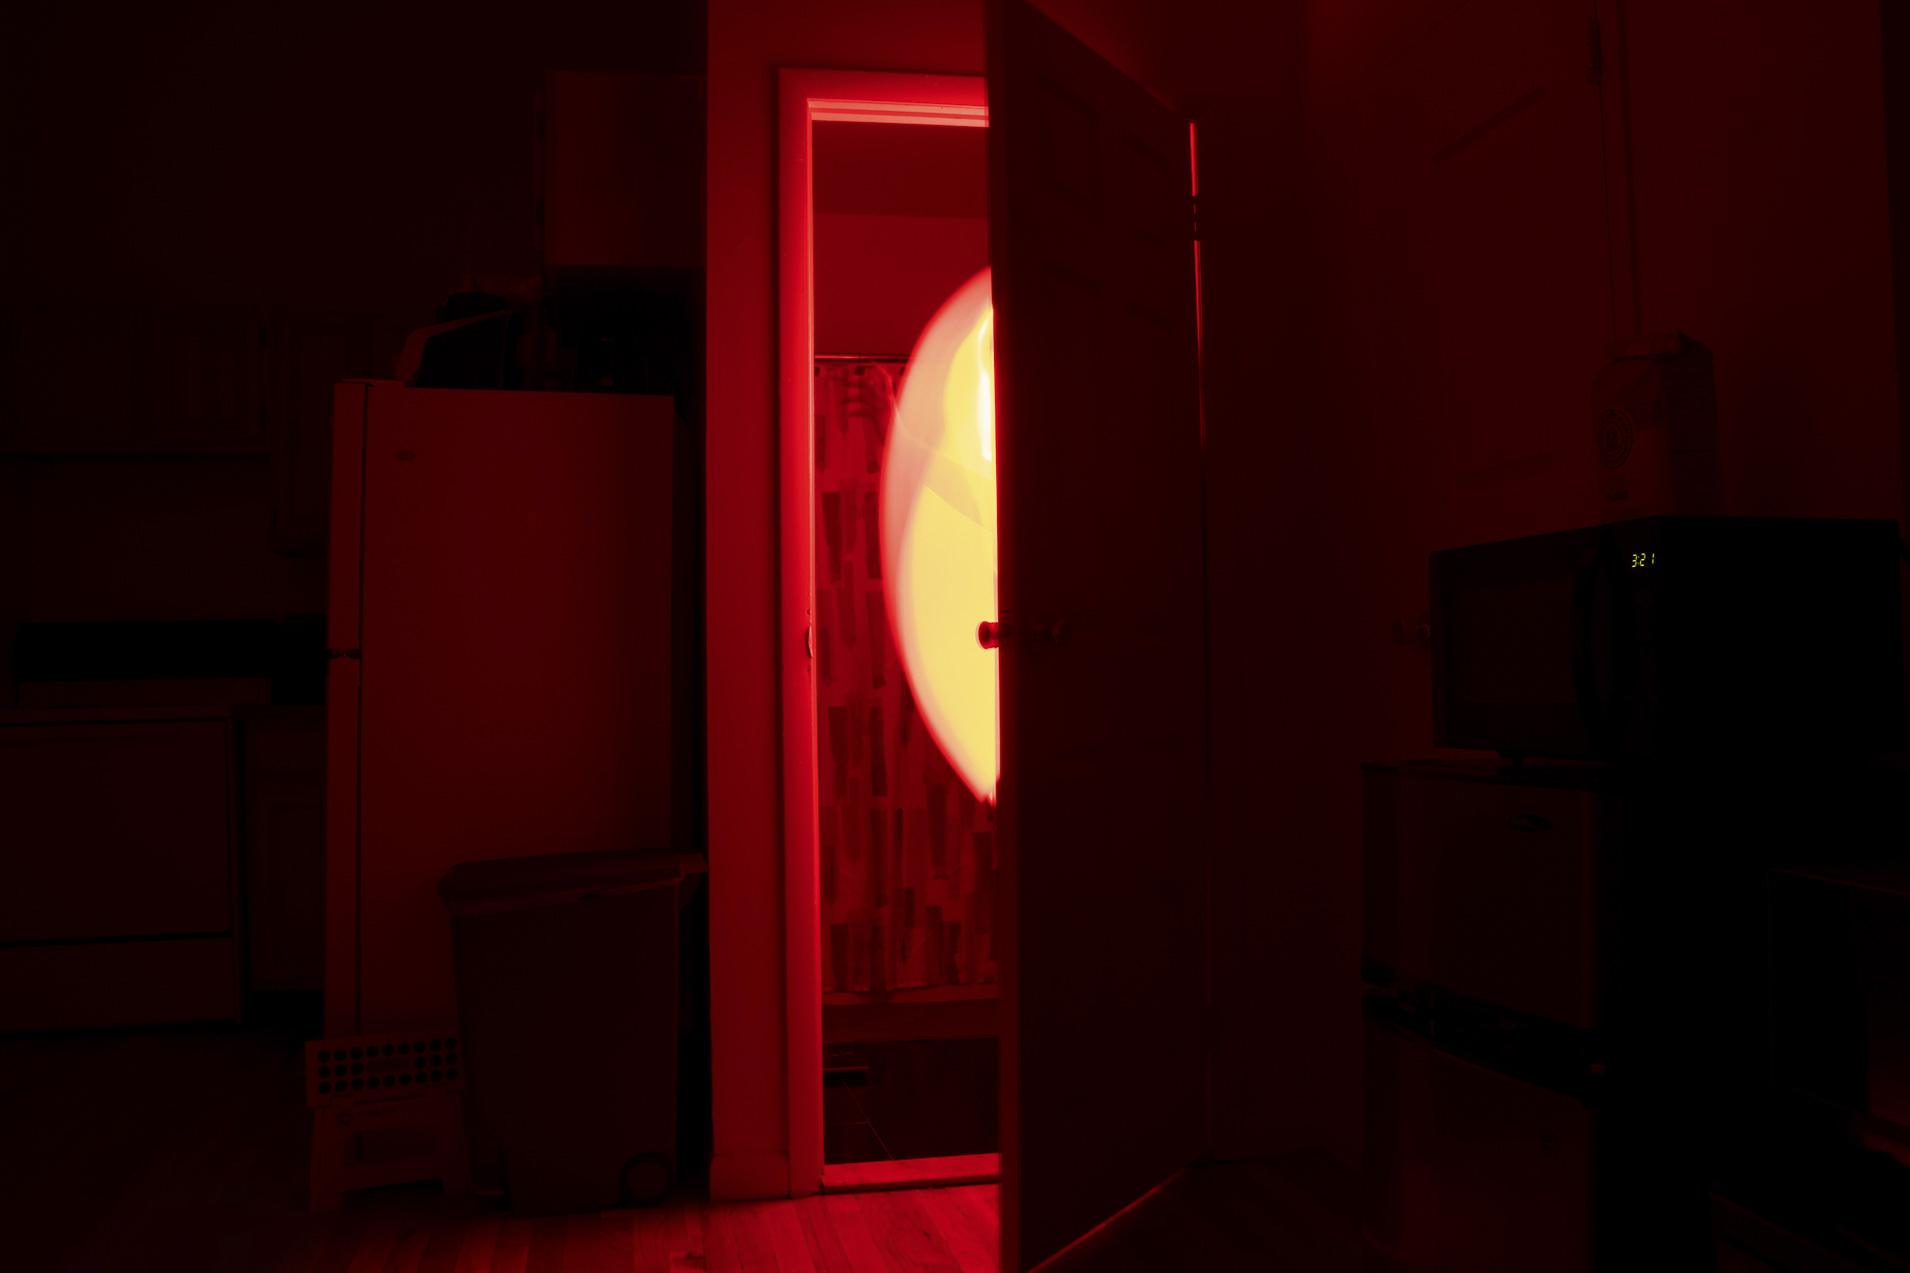 Light shines through an open door in a room